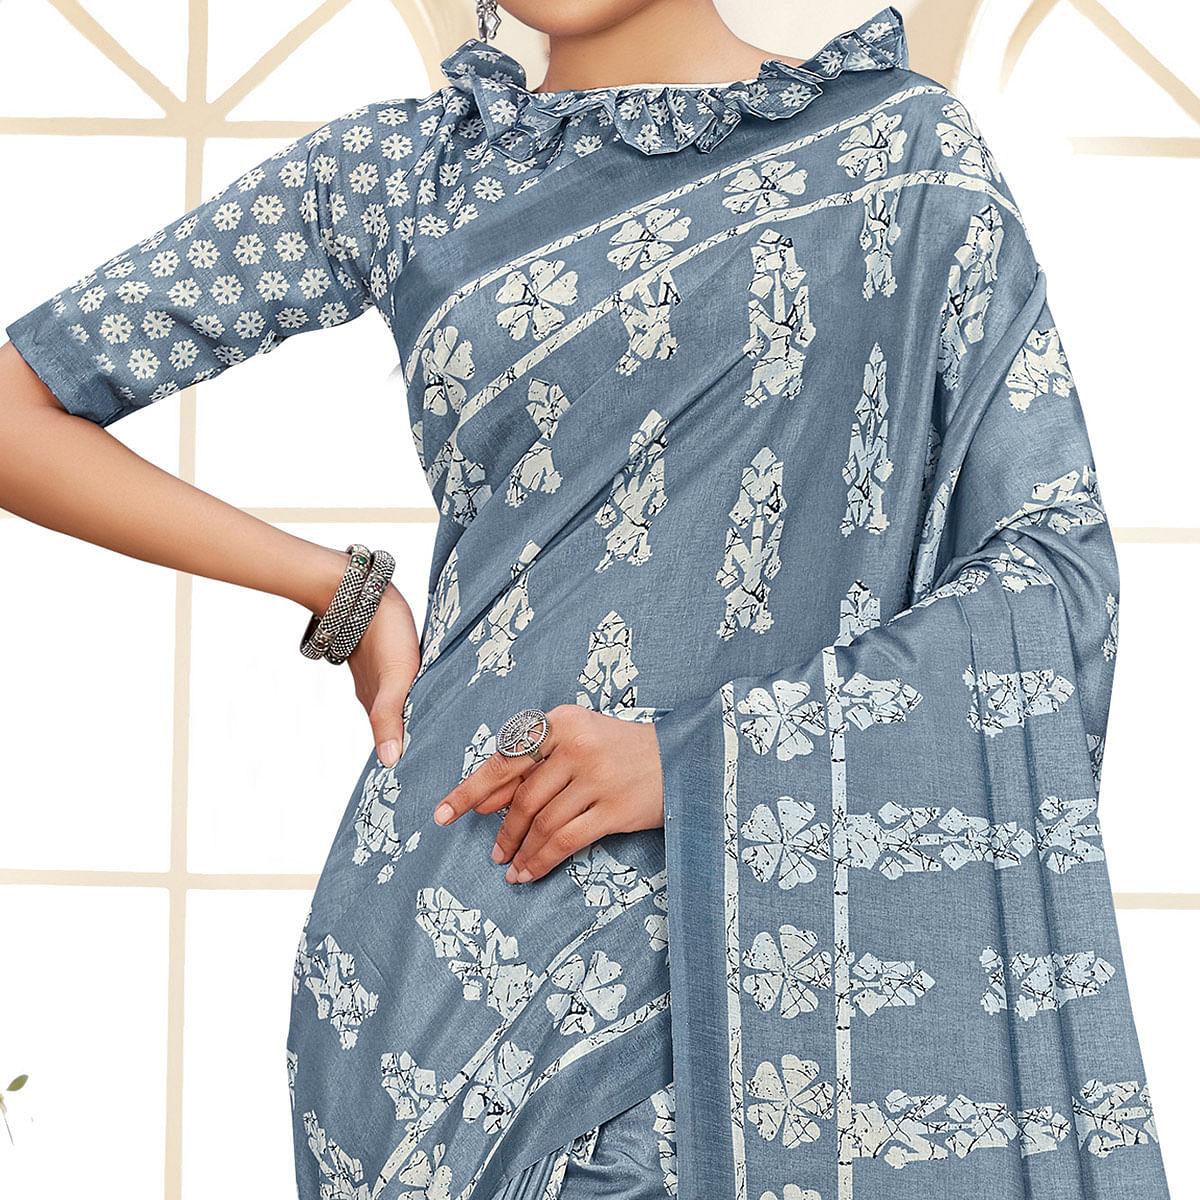 Blue Casual Wear Printed Art Silk Saree - Peachmode